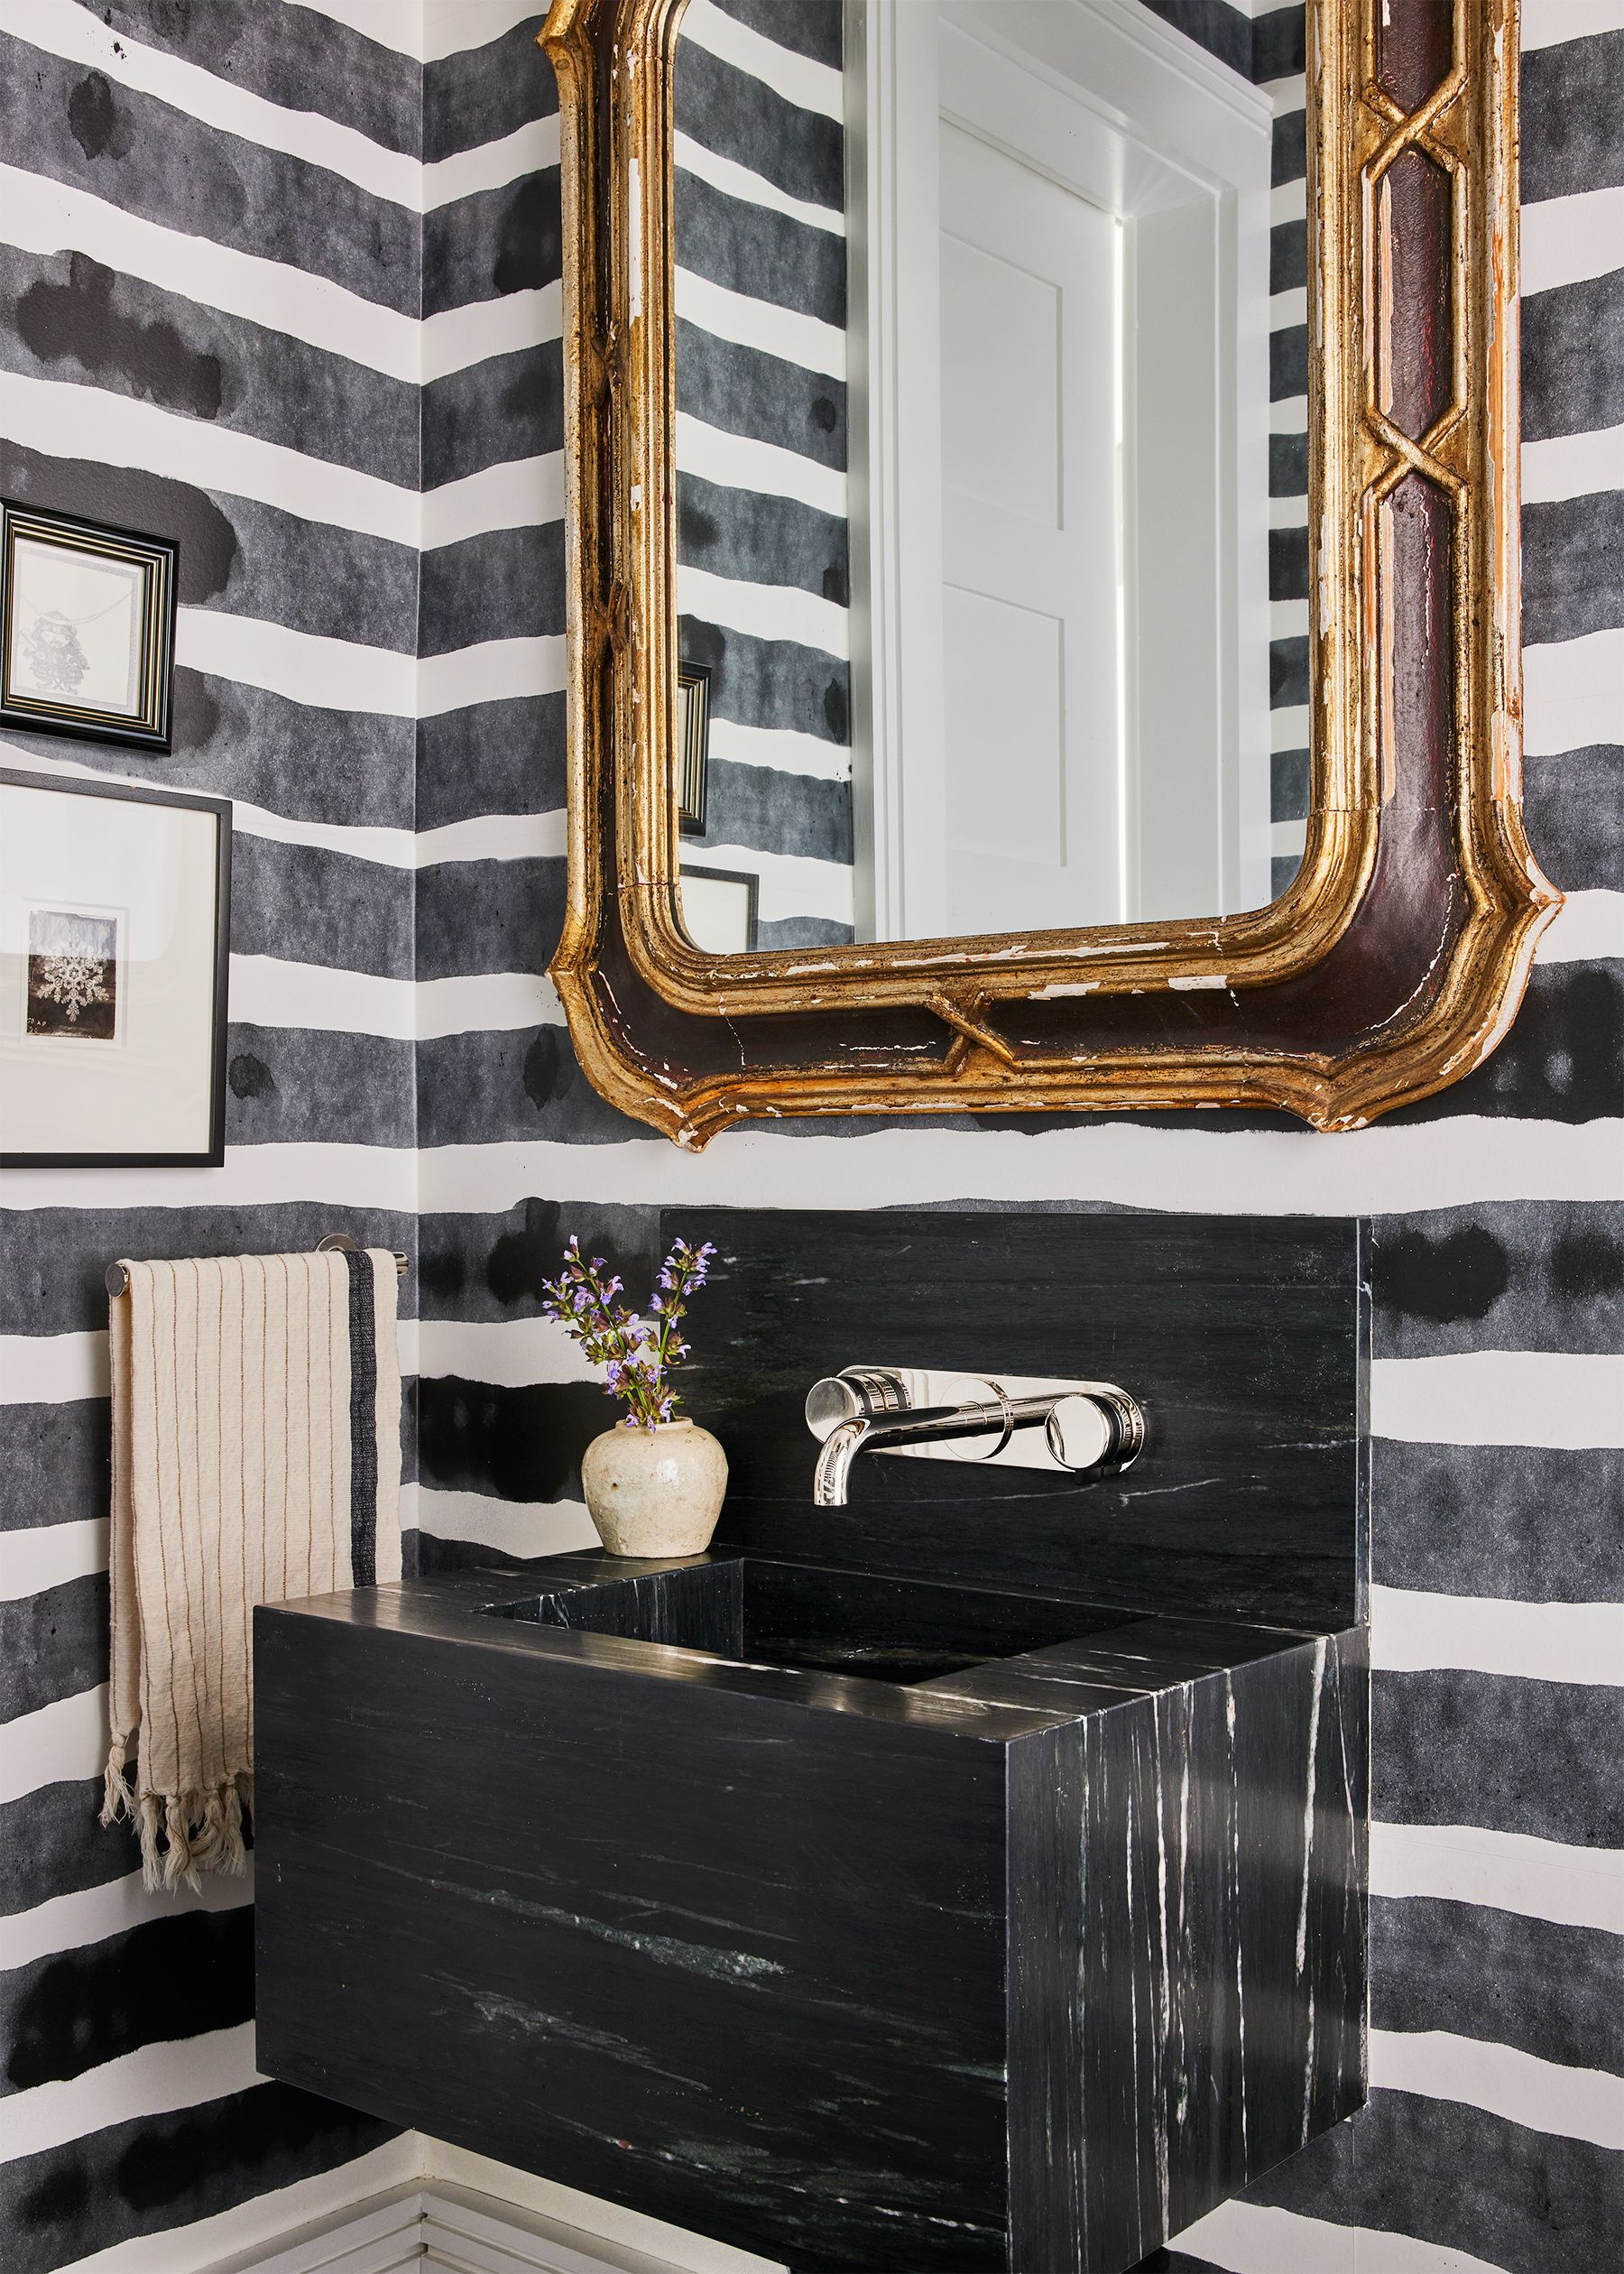 15 NonBoring Black And White Bathroom Decor Ideas  Bathroom wallpaper  Home decor inspiration Home